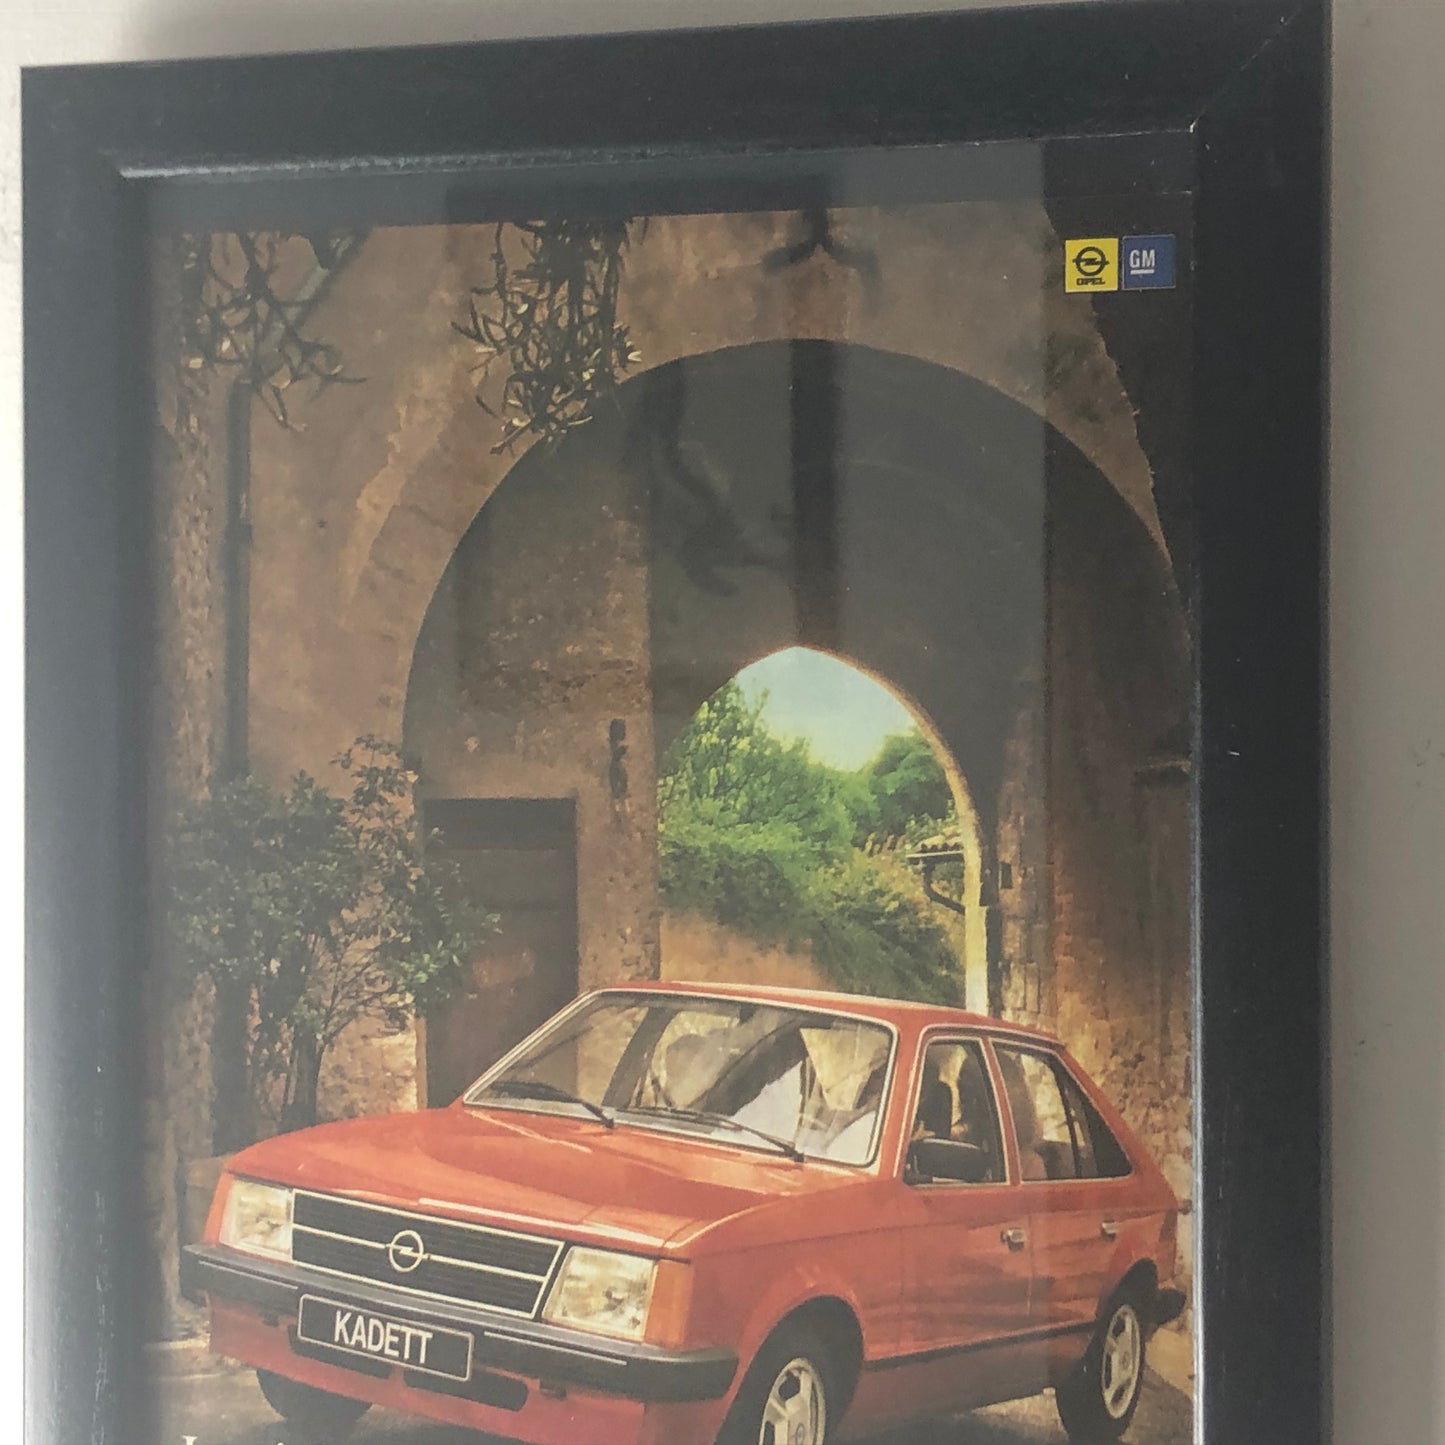 Opel, Advertising Year 1981 Opel Kadett The Joy of Living